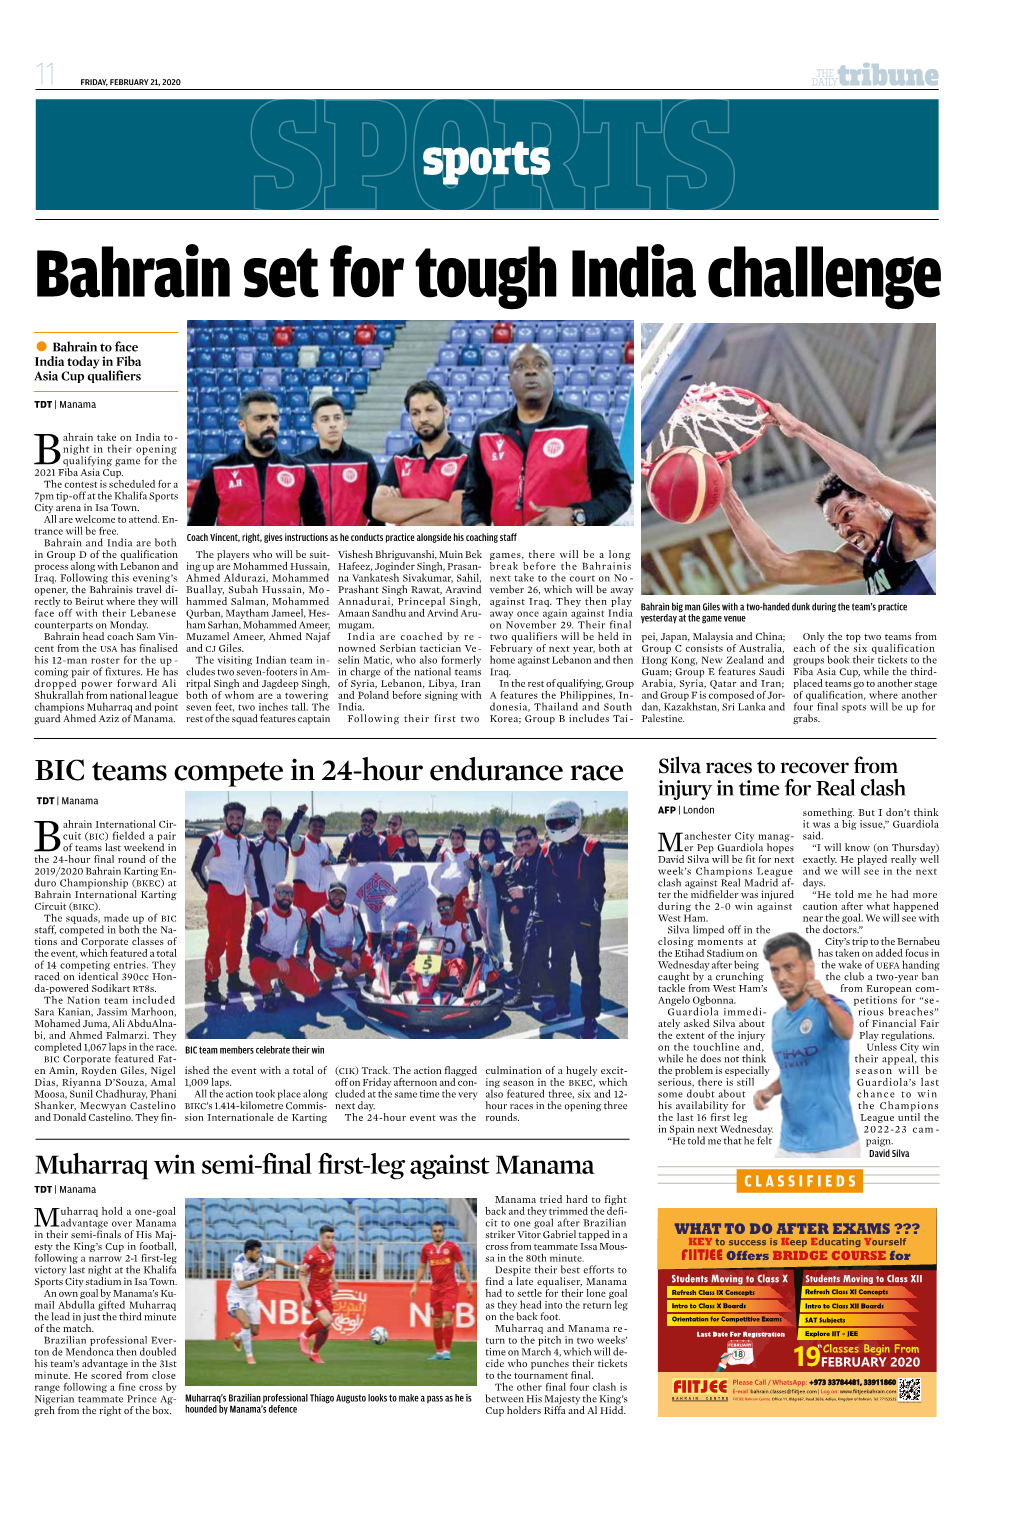 Bahrain Set for Tough India Challenge